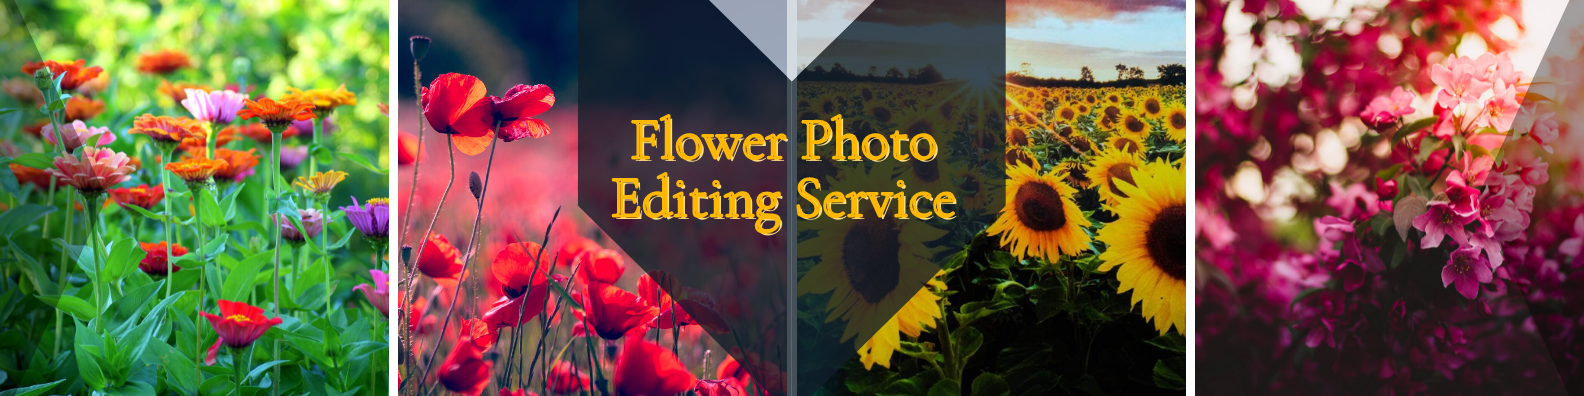 Flower Photo Editing Service